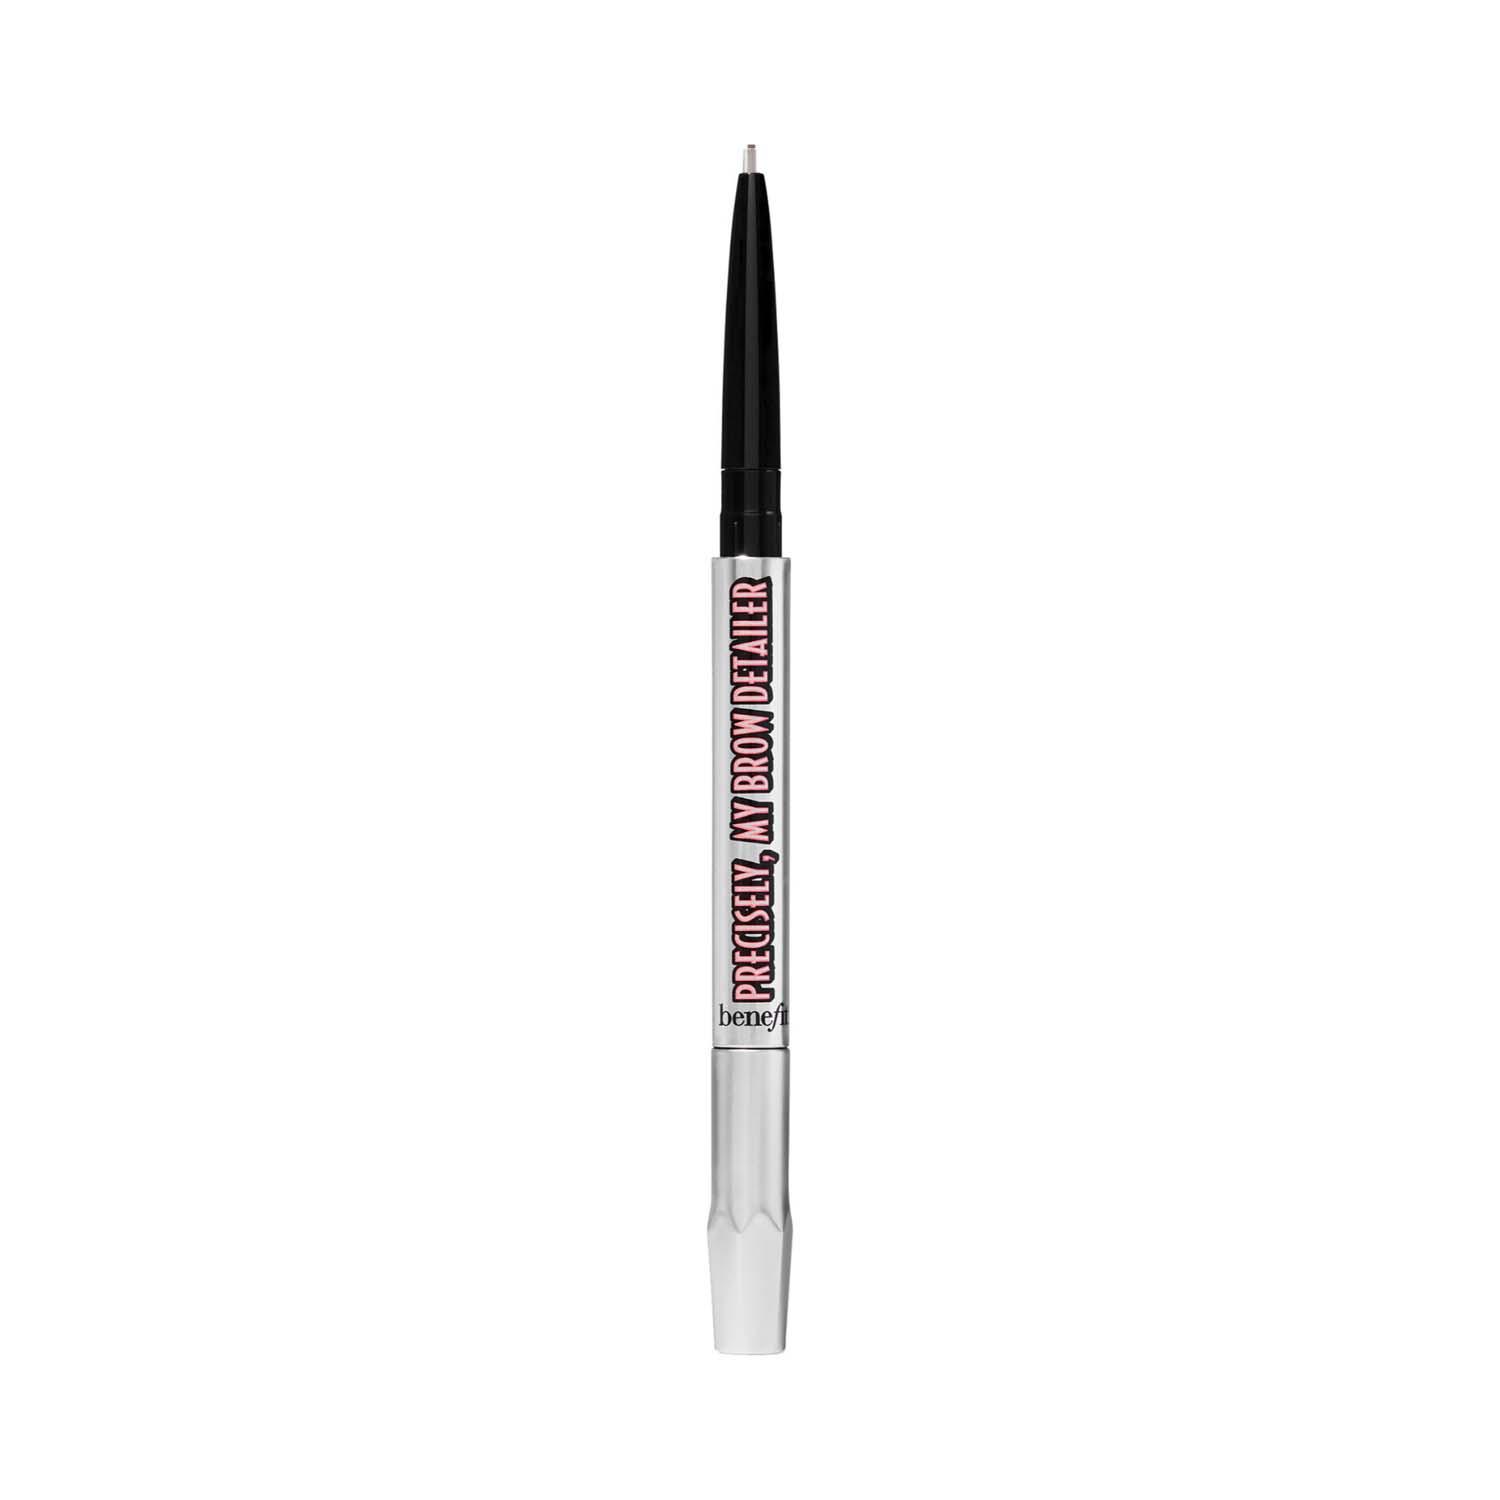 Benefit Cosmetics | Benefit Cosmetics Precisely, My Brow Detailer Eyebrow Pencil - 5 Warm Black Brown (0.02 g)